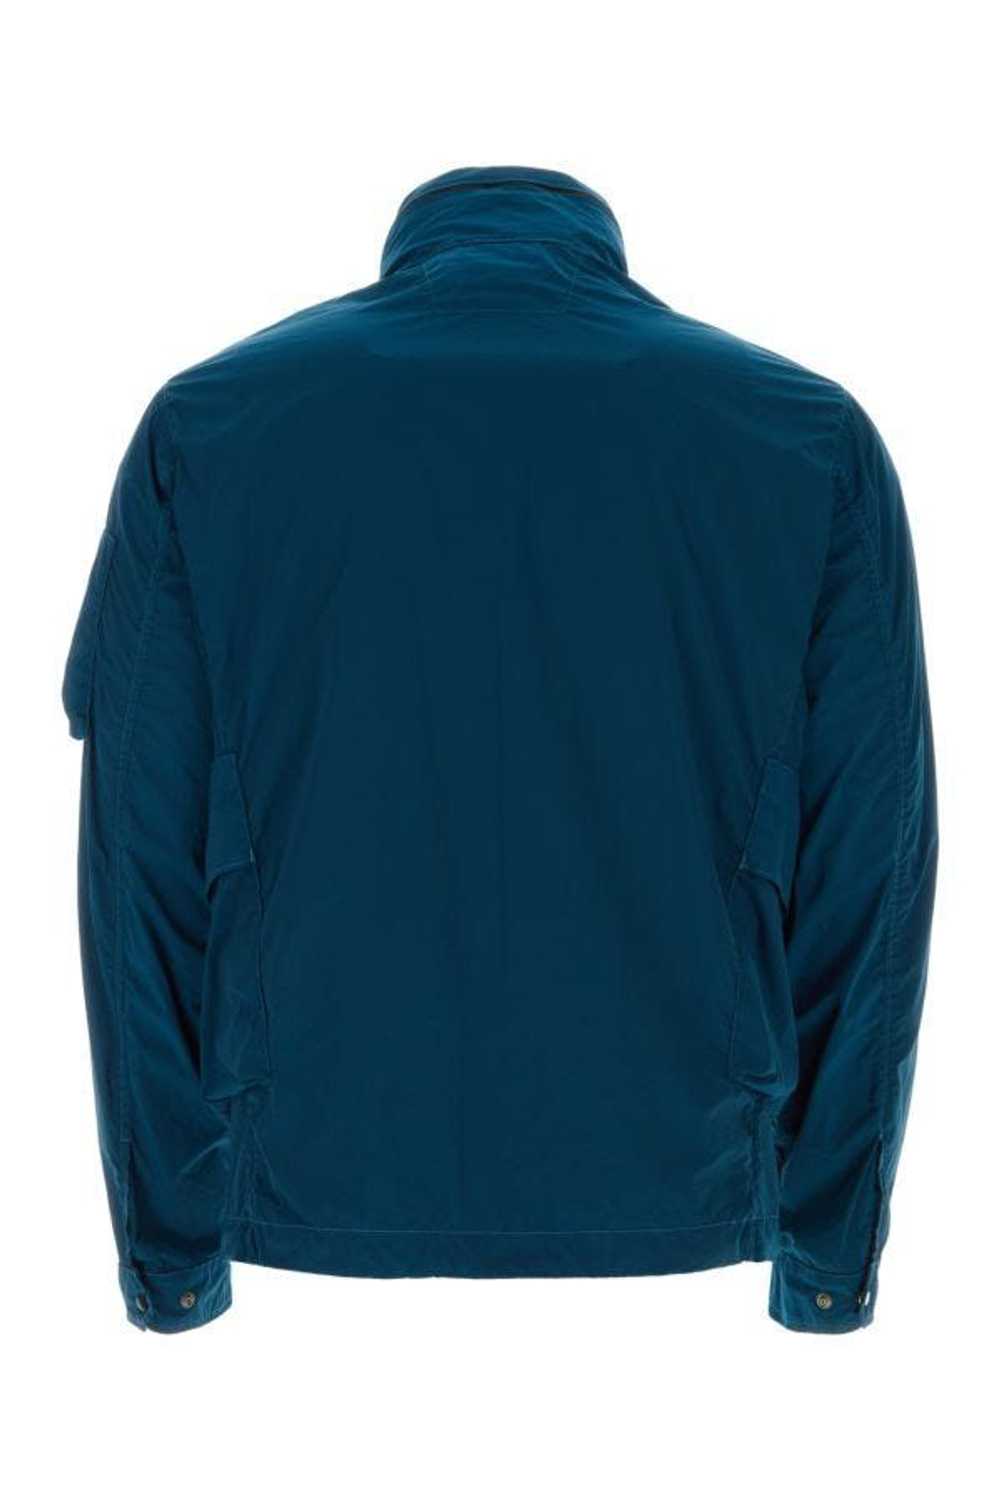 C.P. Company Blue Stretch Nylon Jacket - image 4